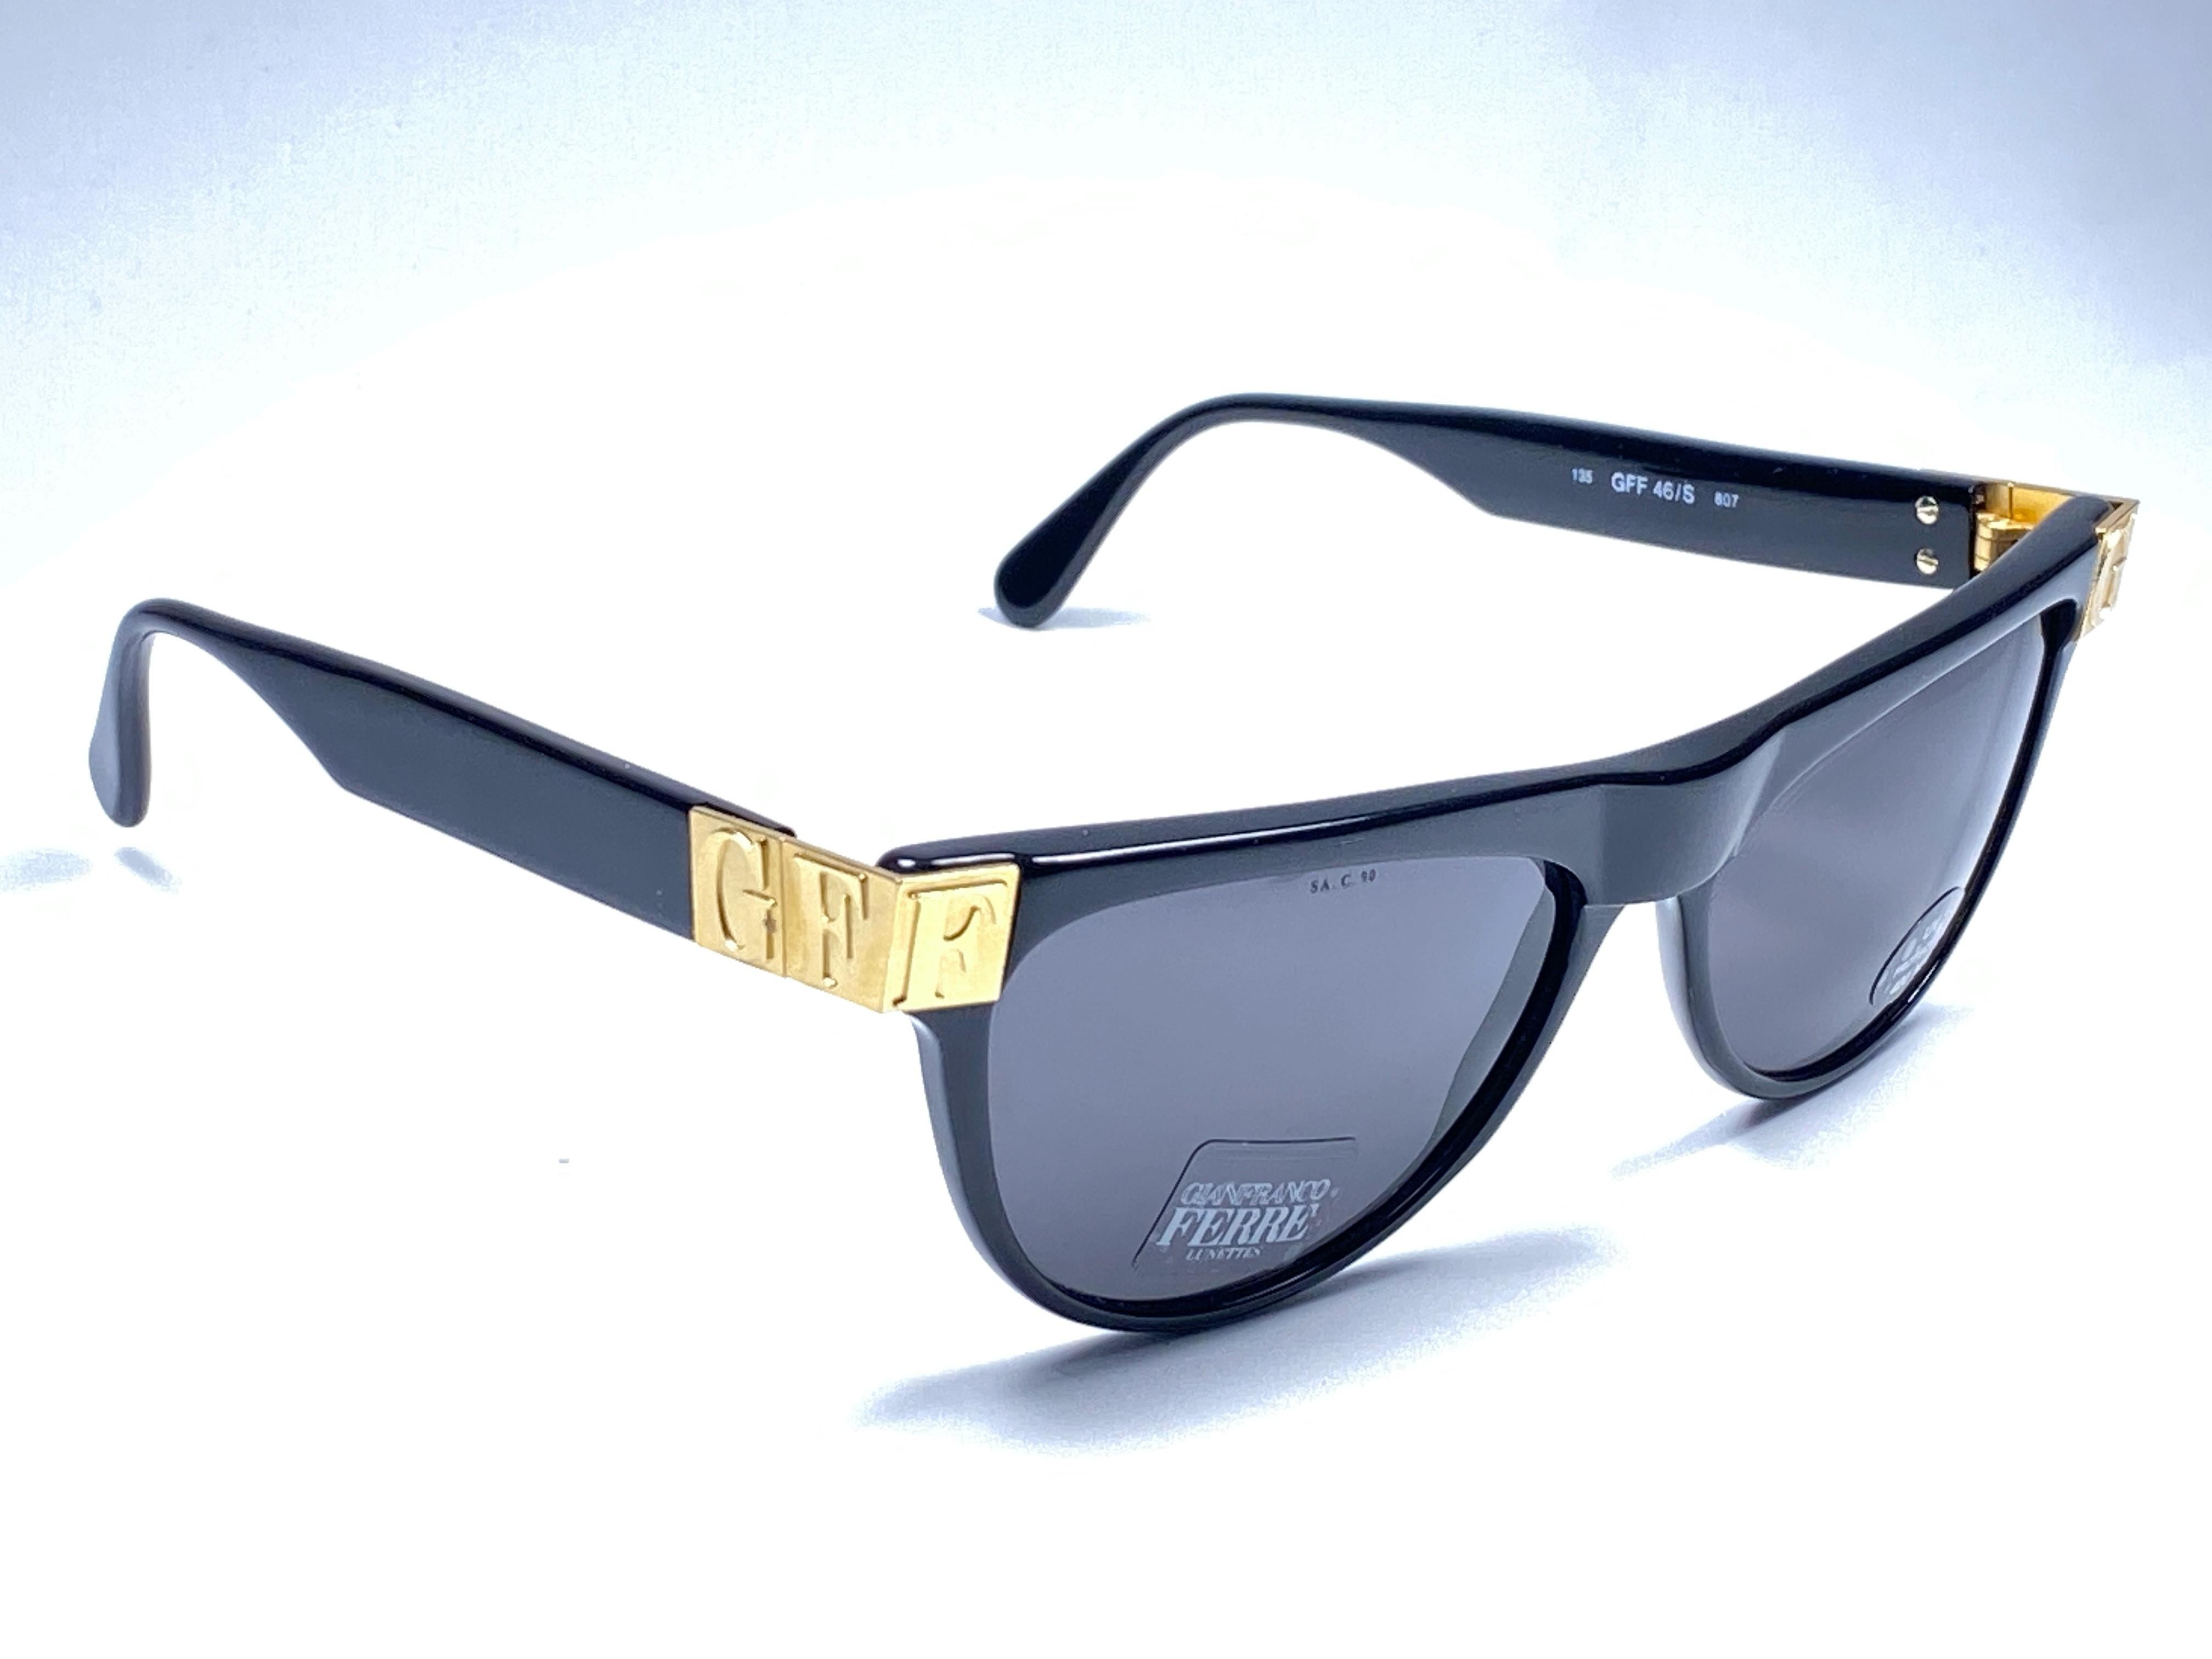 gianfranco ferre sunglasses price